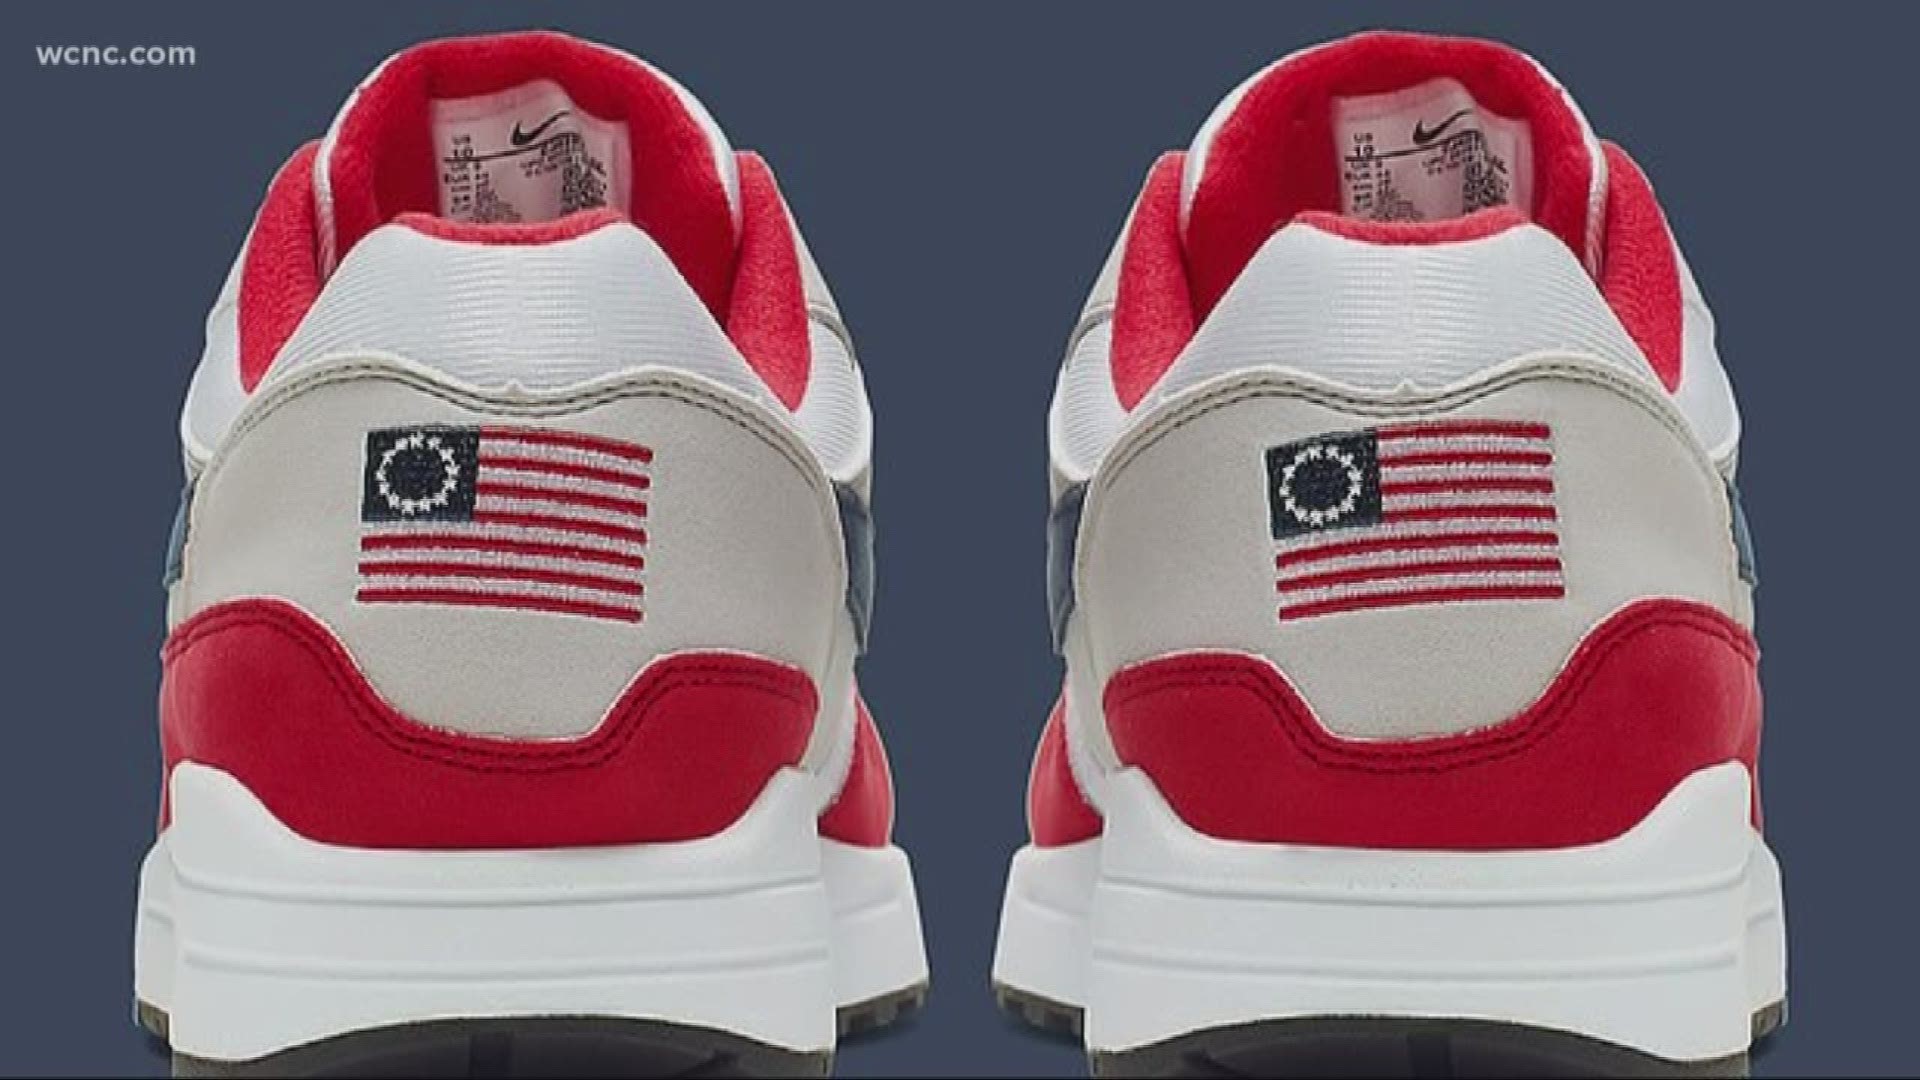 Nike yanks Ross American shoe at Colin Kaepernick's urging | wfmynews2.com